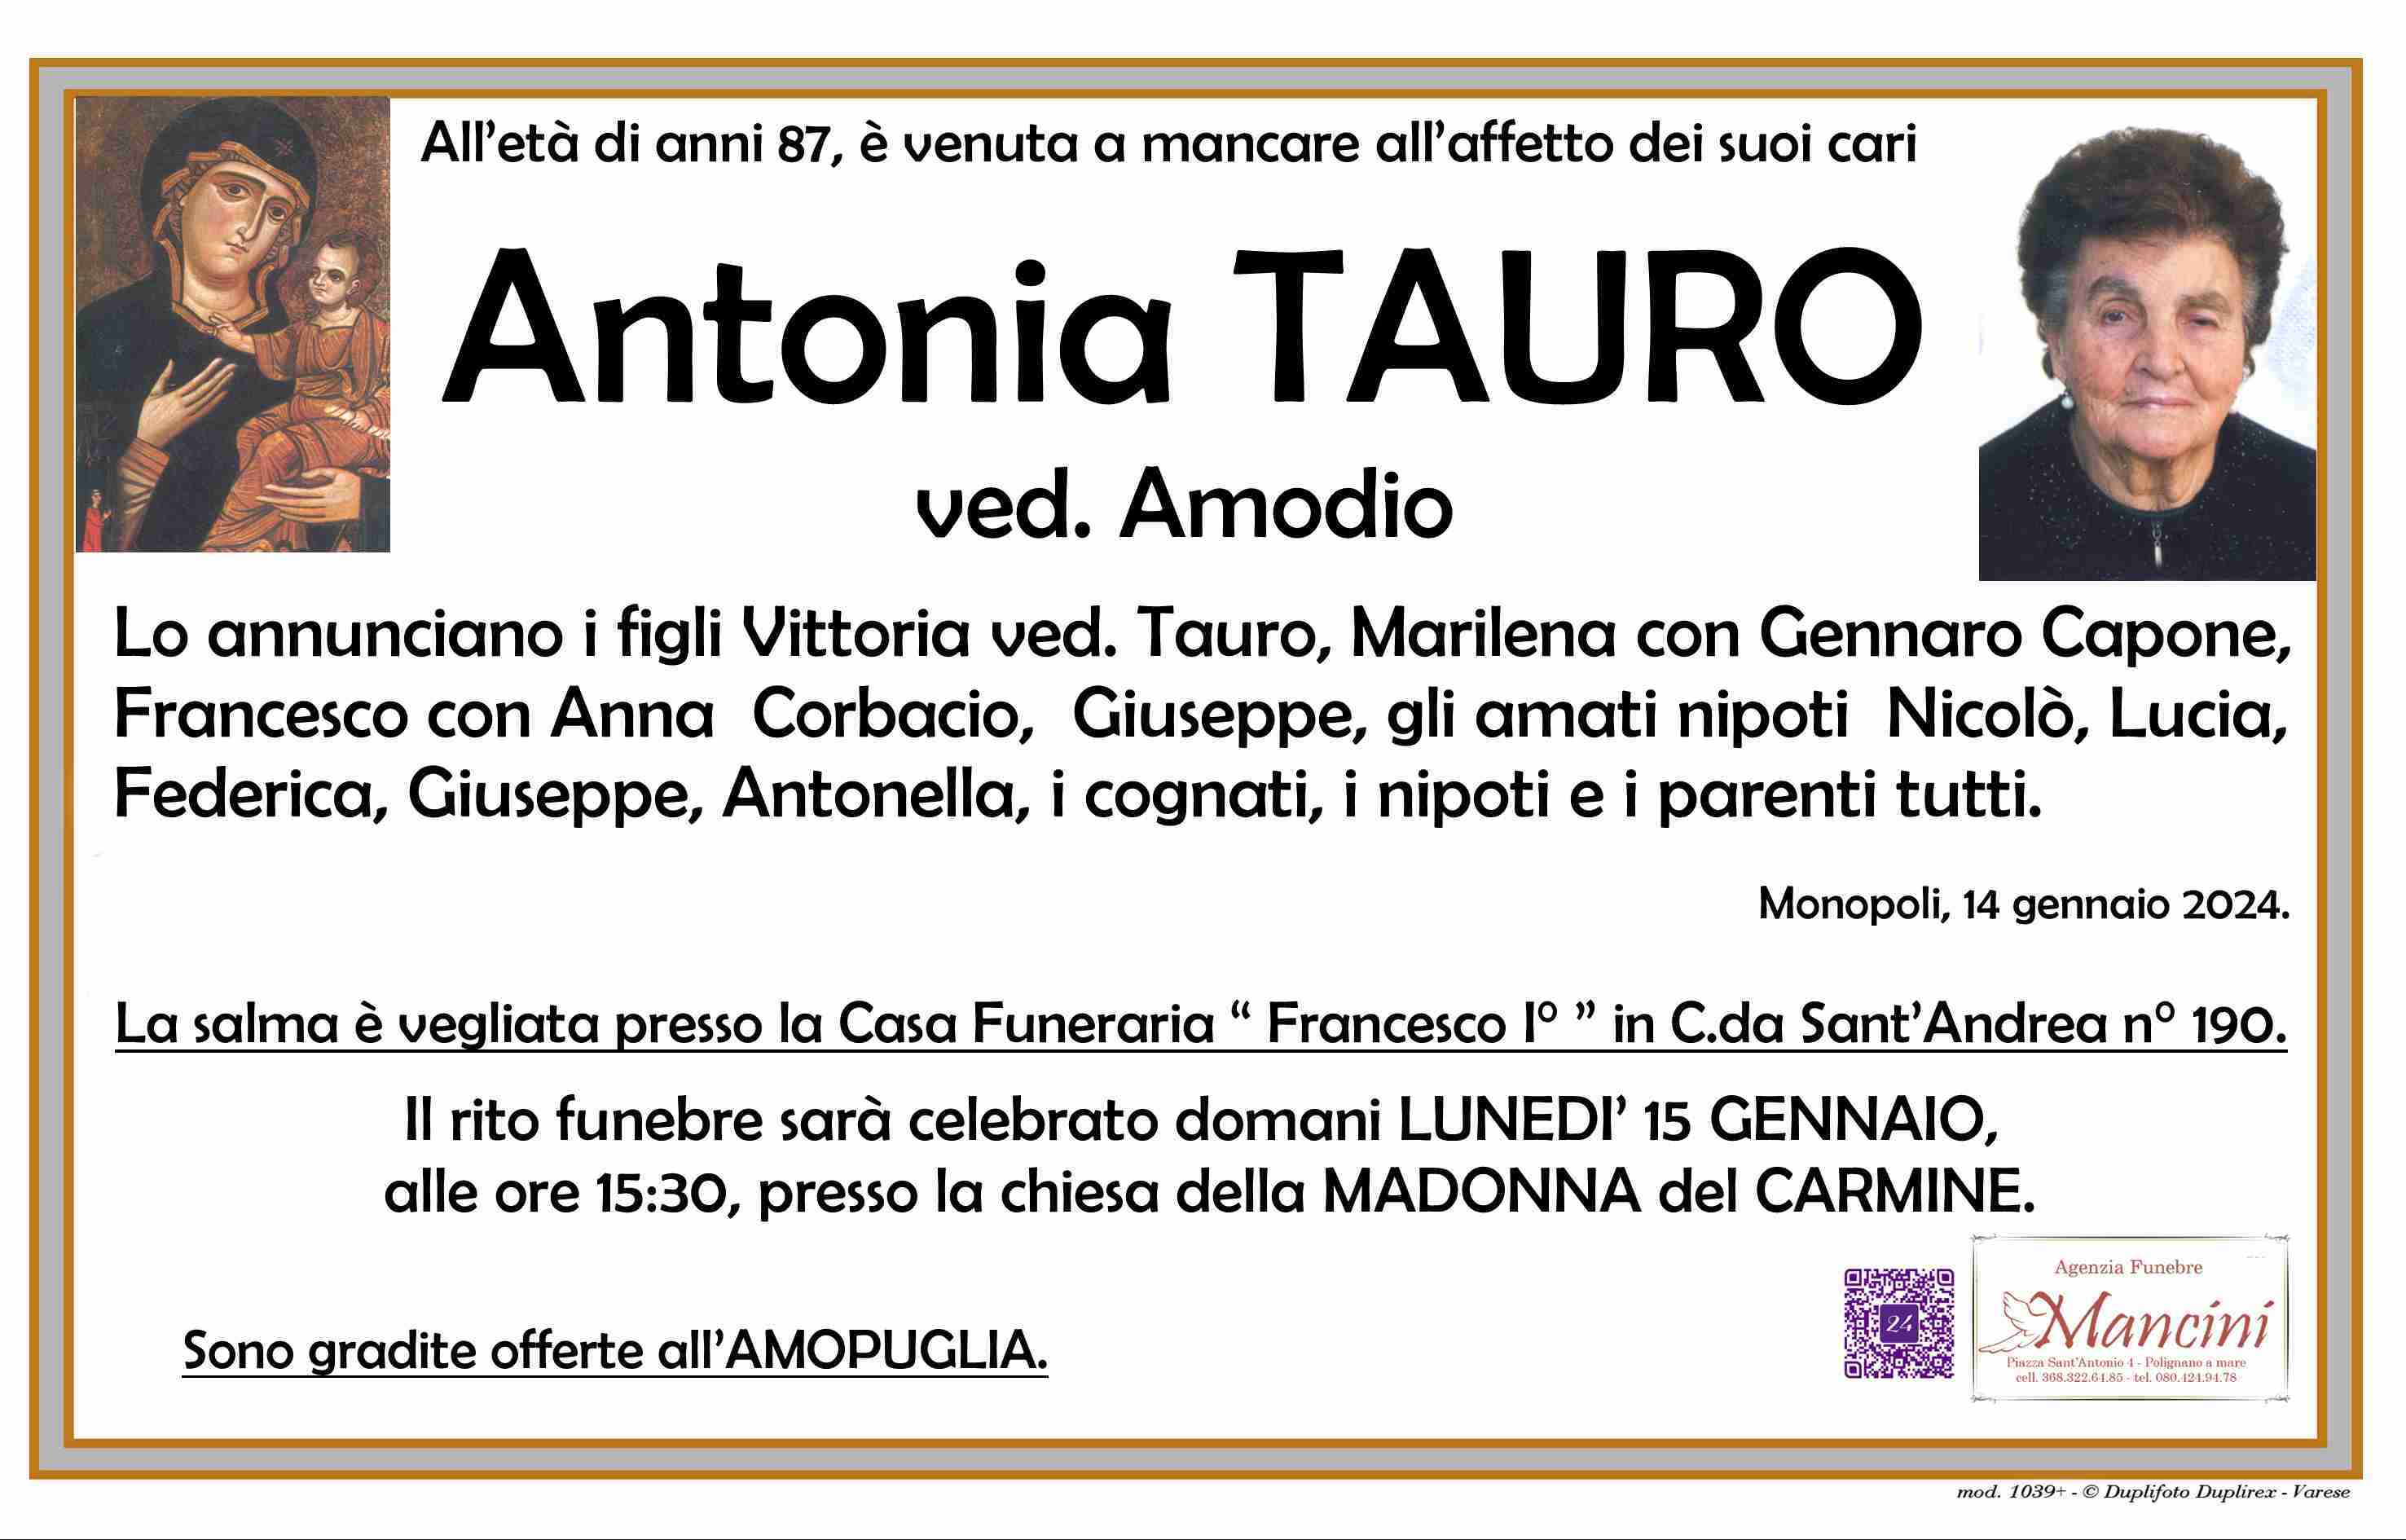 Antonia Tauro